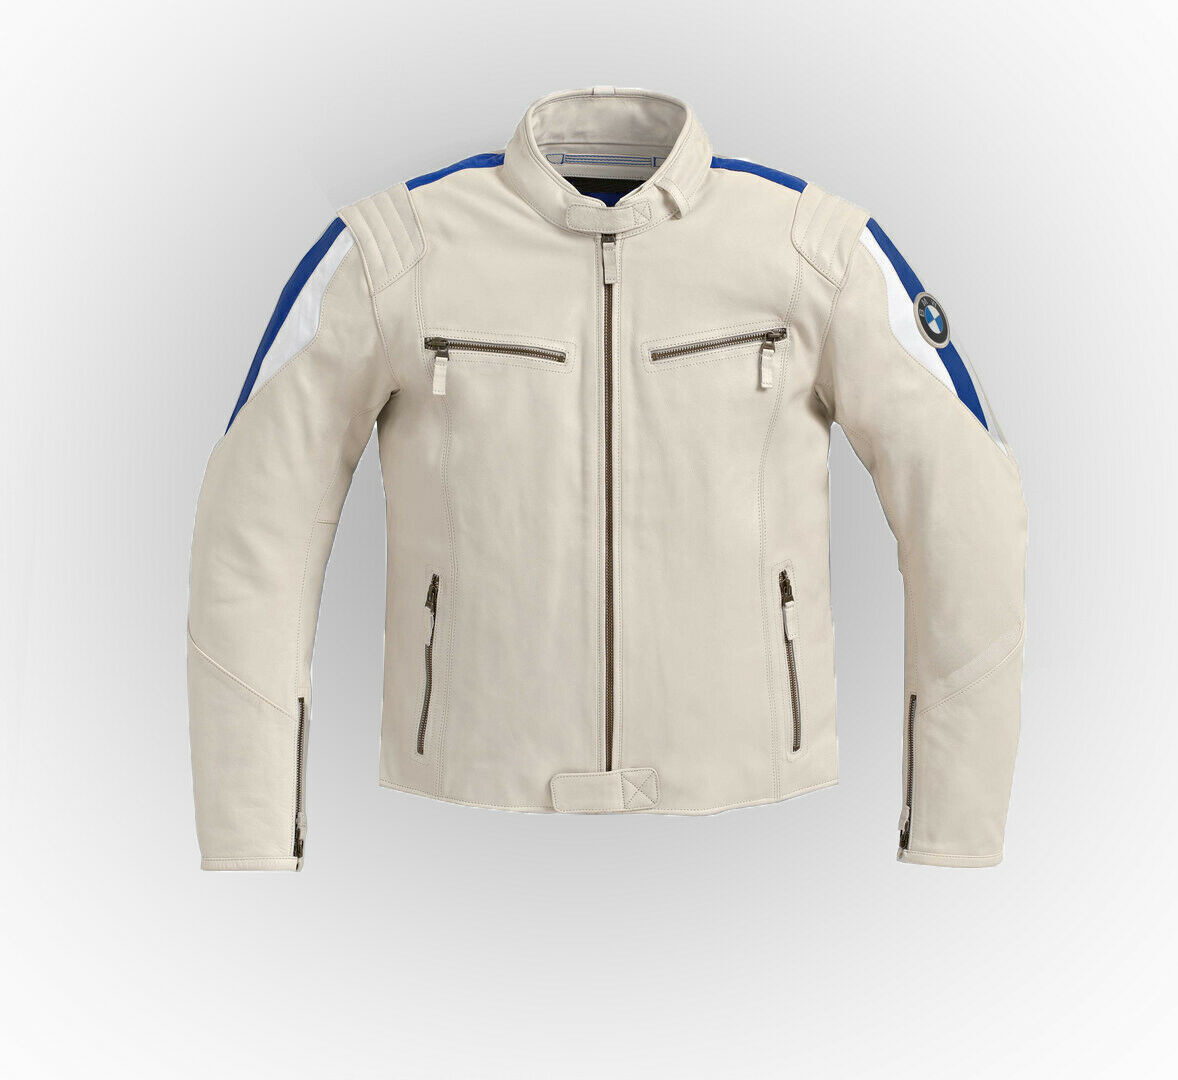 Handmade Genuine Men Leather Jacket Racing White Sports Armored Motorbike Jacket